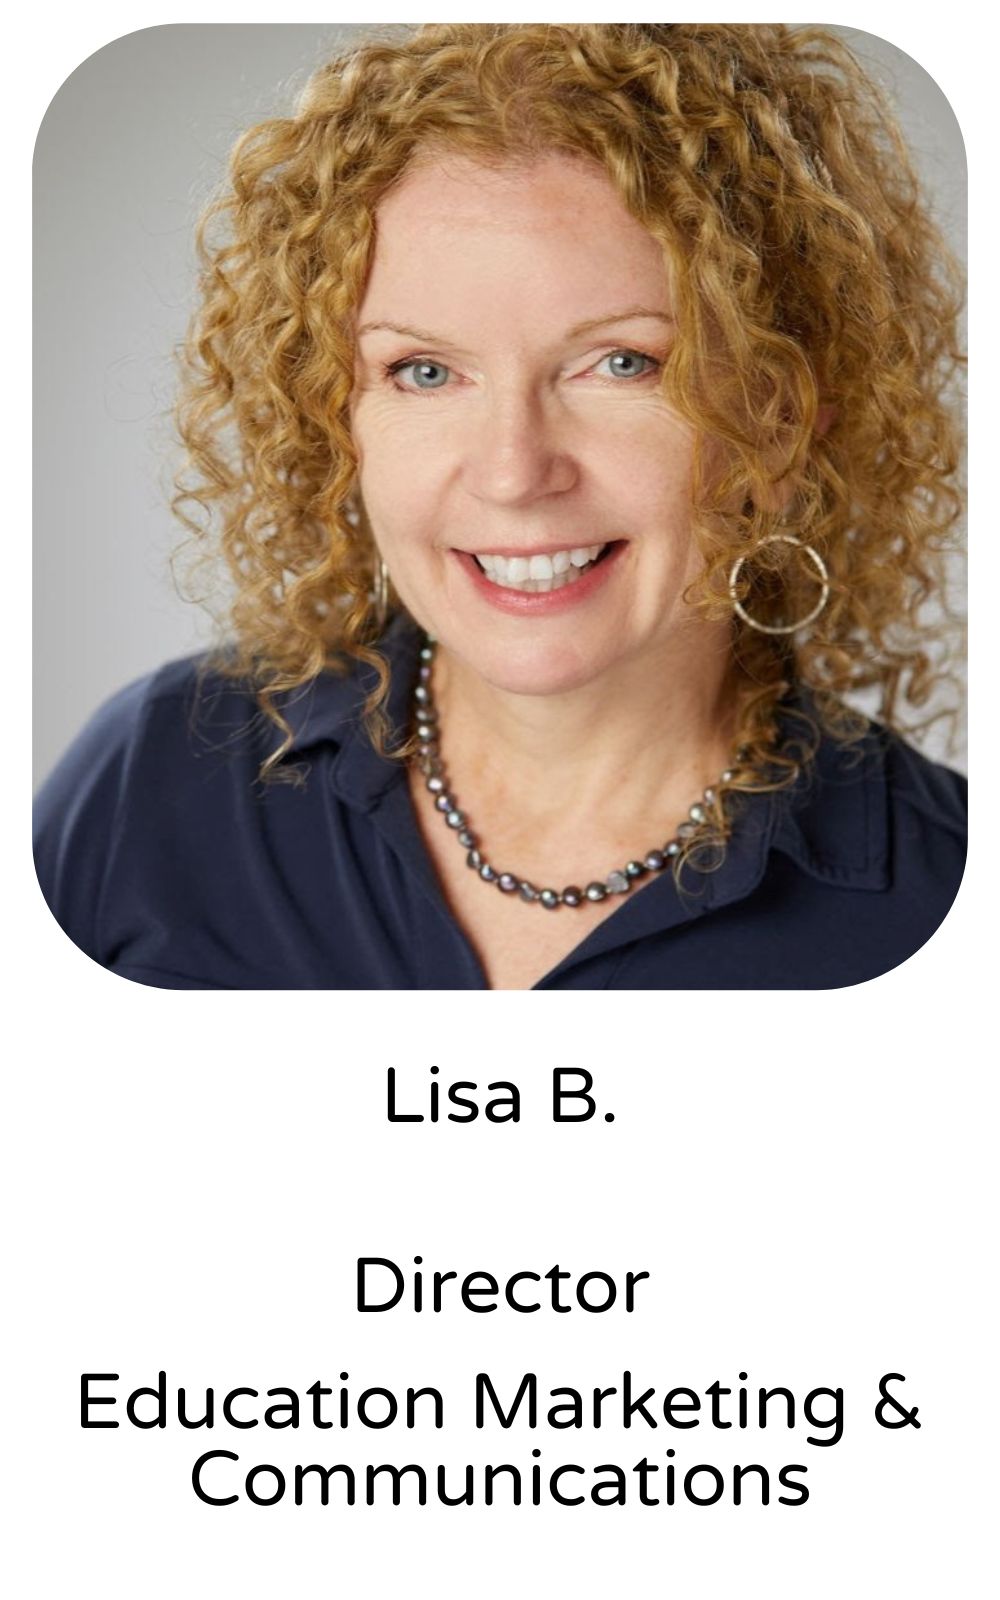 Lisa B., Director, Education Marketing & Communications